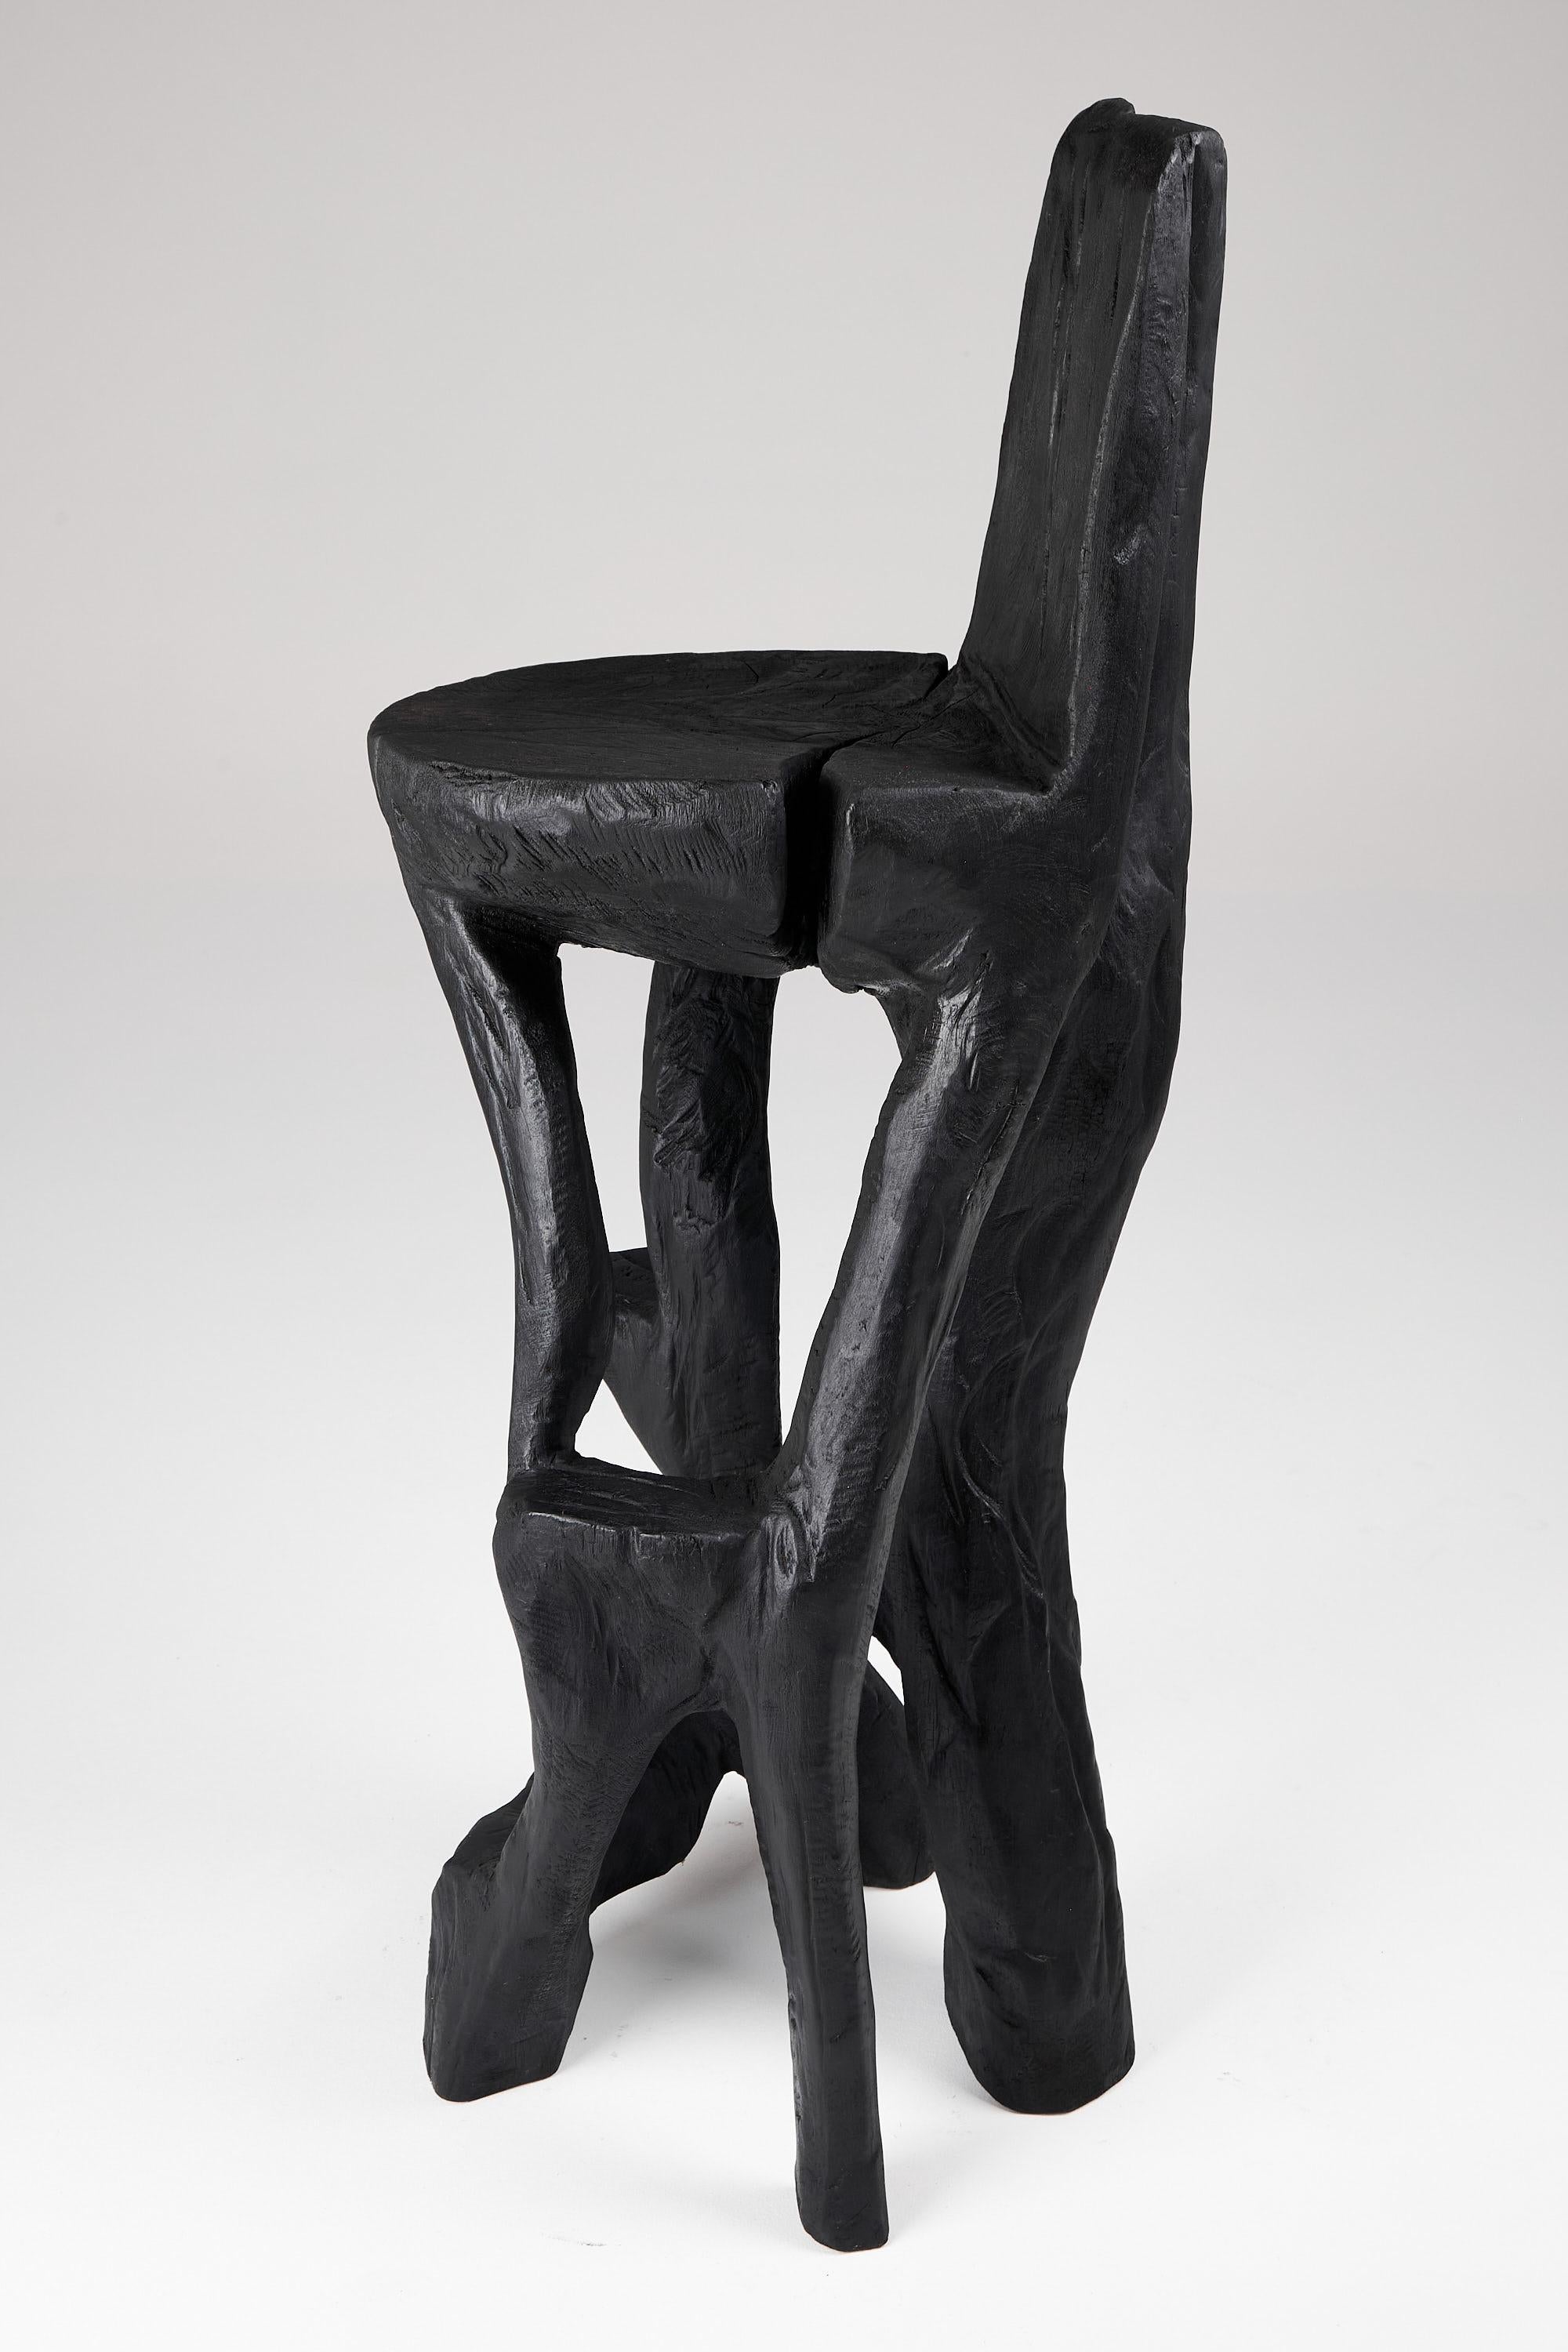 Makha, Skulpturaler Barstuhl aus Massivholz, Original zeitgenössisches Design, Logniture im Angebot 5